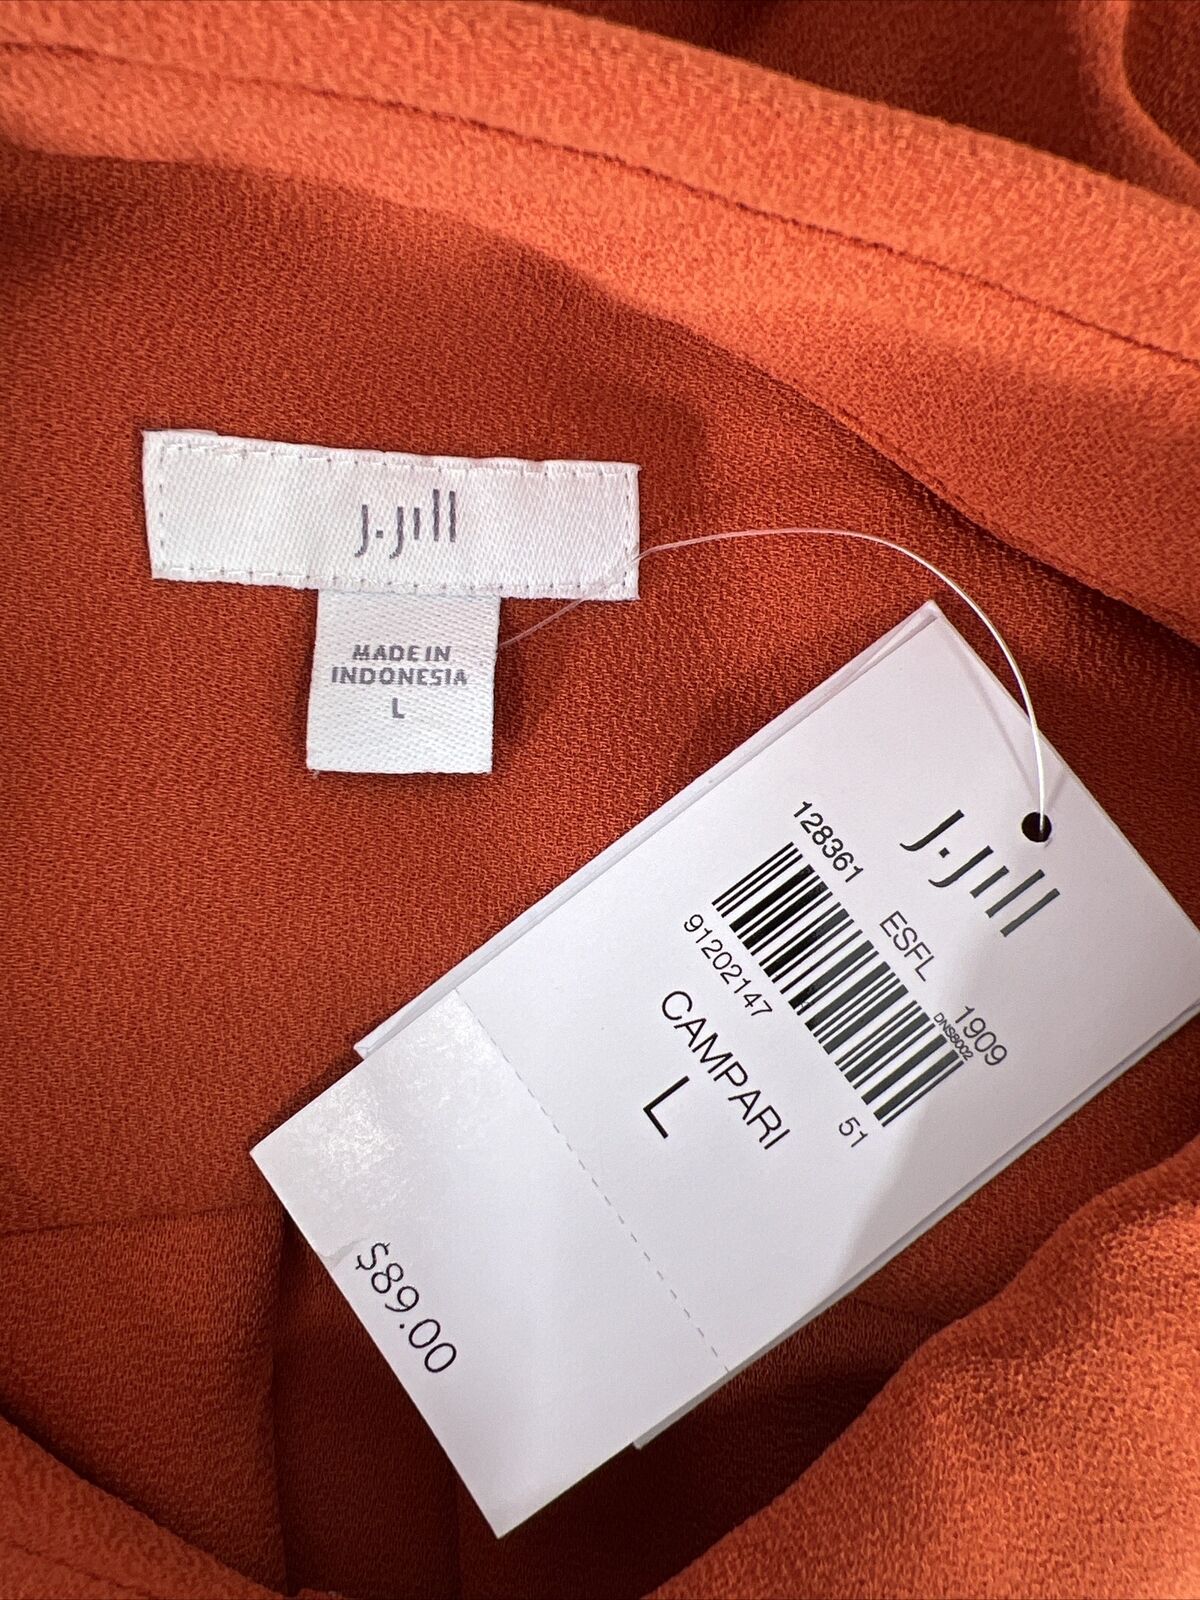 NEW J. Jill Women's Orange Polyester Long Sleeve Button Up Blouse - L